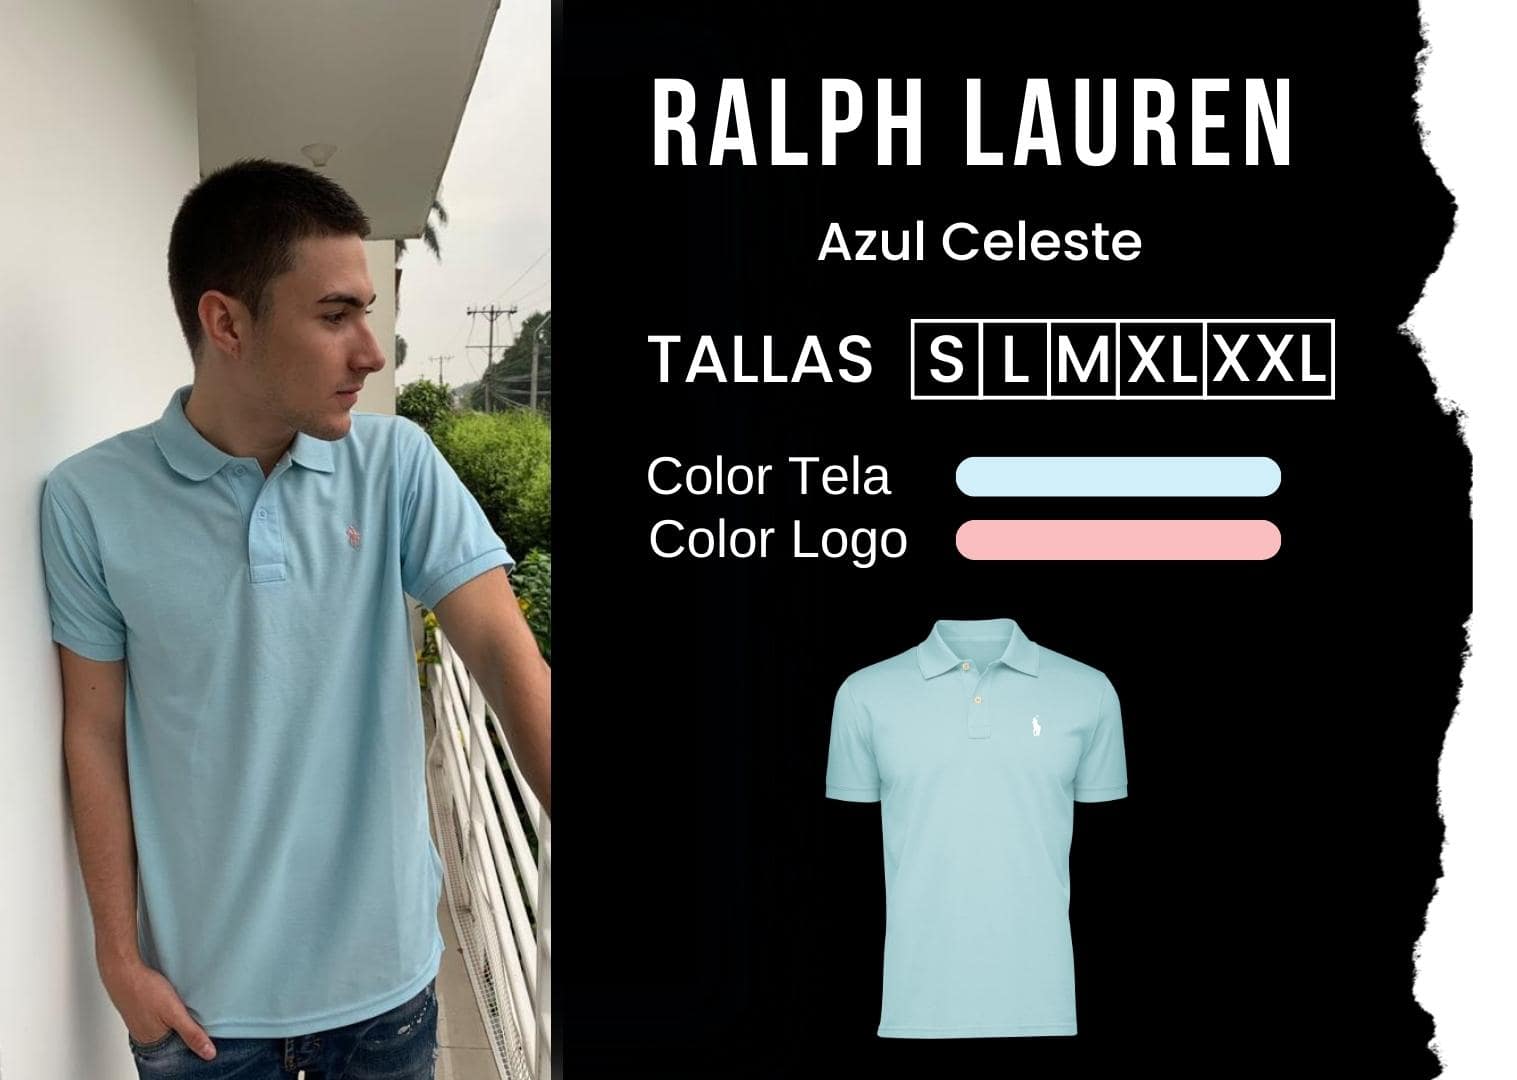 camiseta Ralph Lauren polo hombre tienda olevan color azul celeste